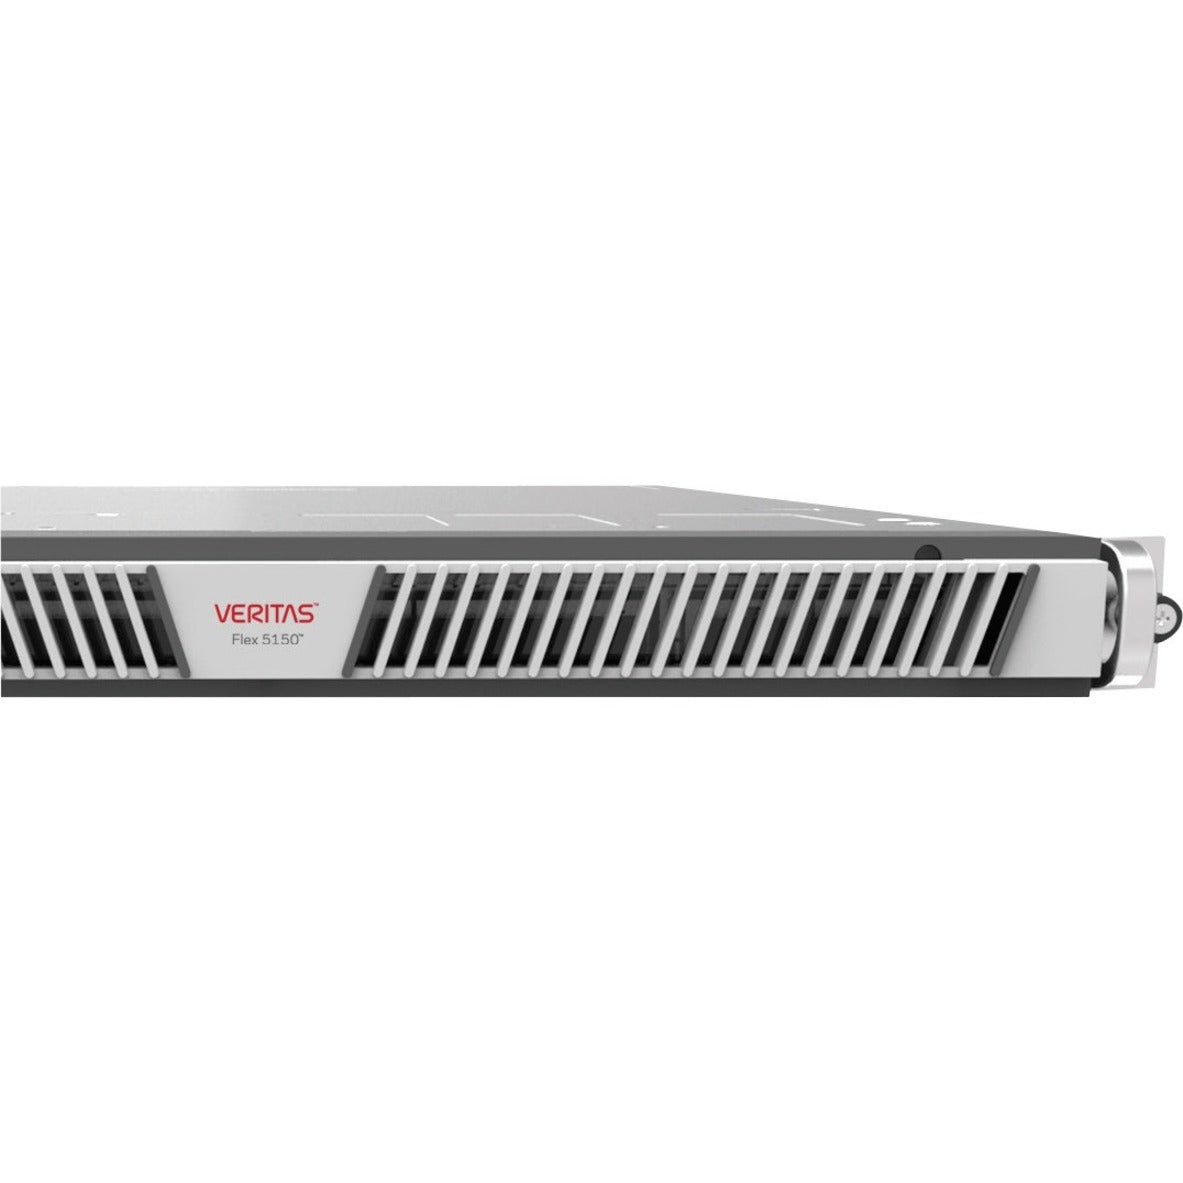 Veritas 26111-M0034 Flex System 5150 NAS Storage System, 15TB Total Hard Drive Capacity Installed, 12Gb/s SAS Controller, 4 Network (RJ-45) Ports